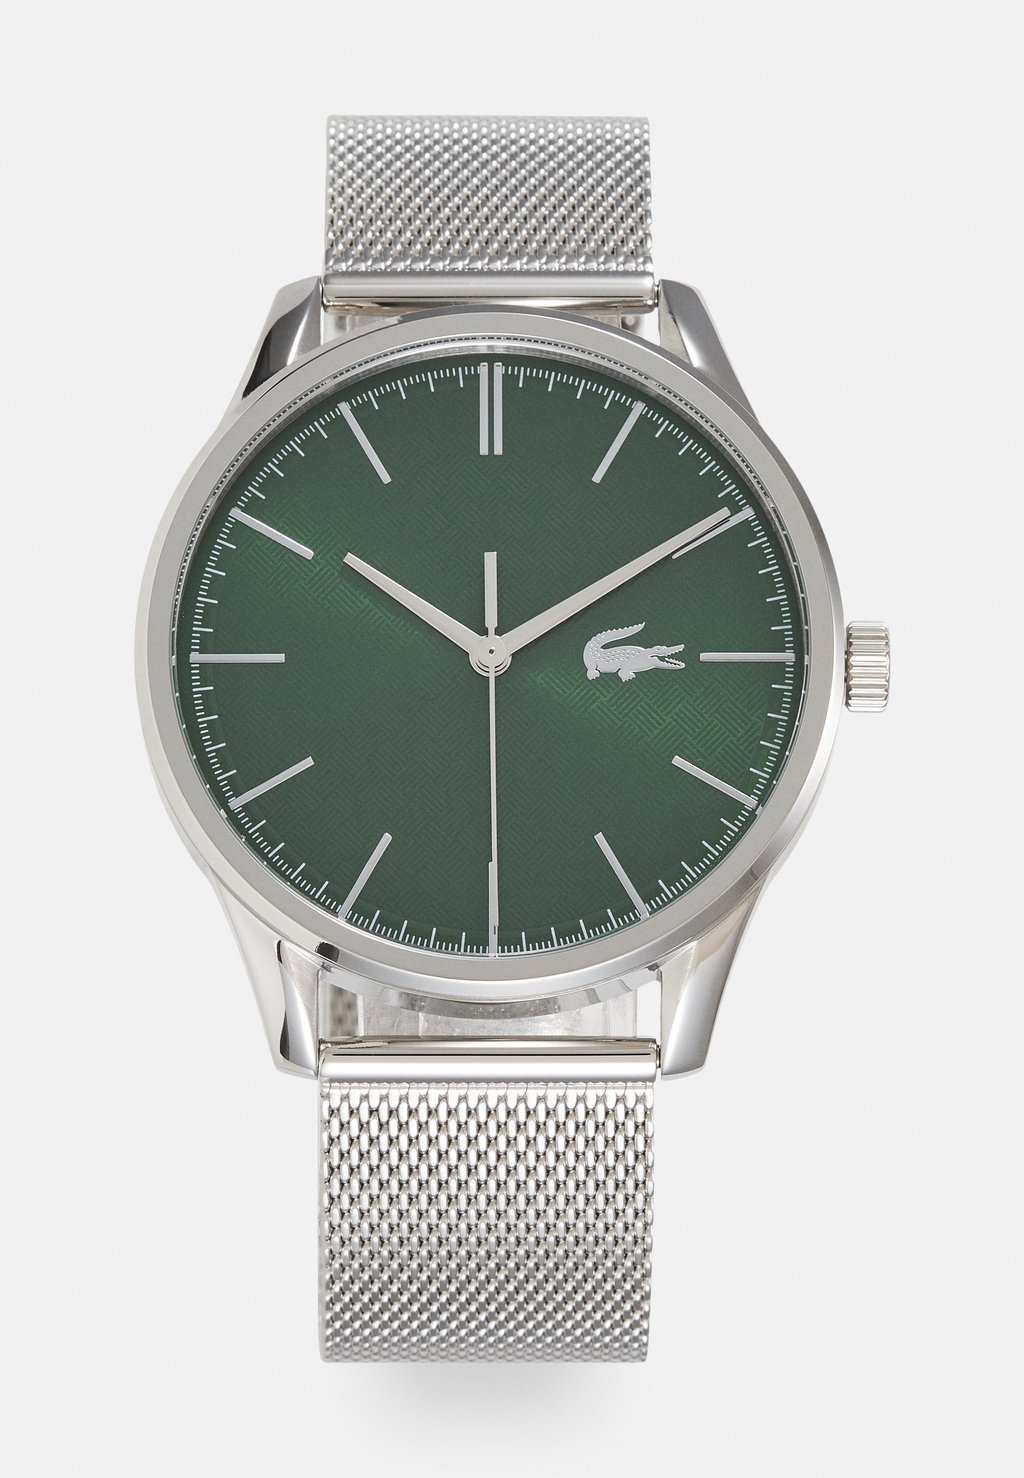 Часы ВЕНА Lacoste, серебристый/зеленый